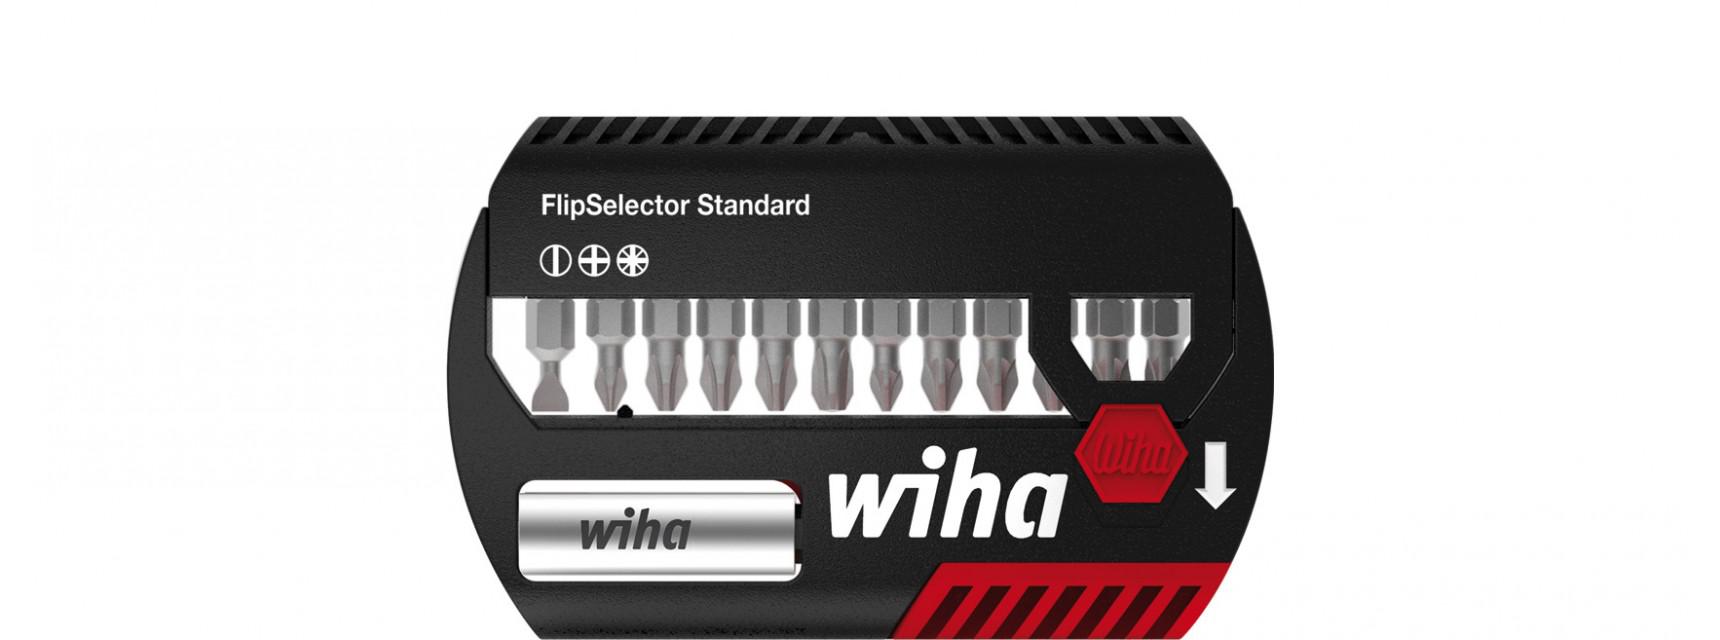 Набор бит FlipSelector Standard 25 мм 7947-005 WIHA 39029